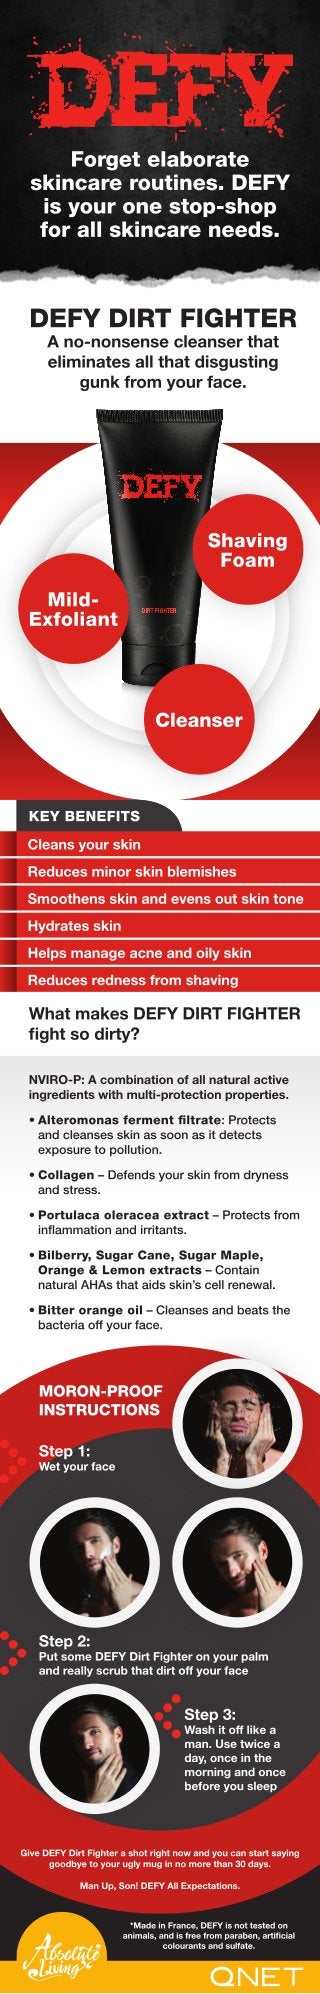 DEFY Dirt Fighter - The New Men's Skincare Range From QNET